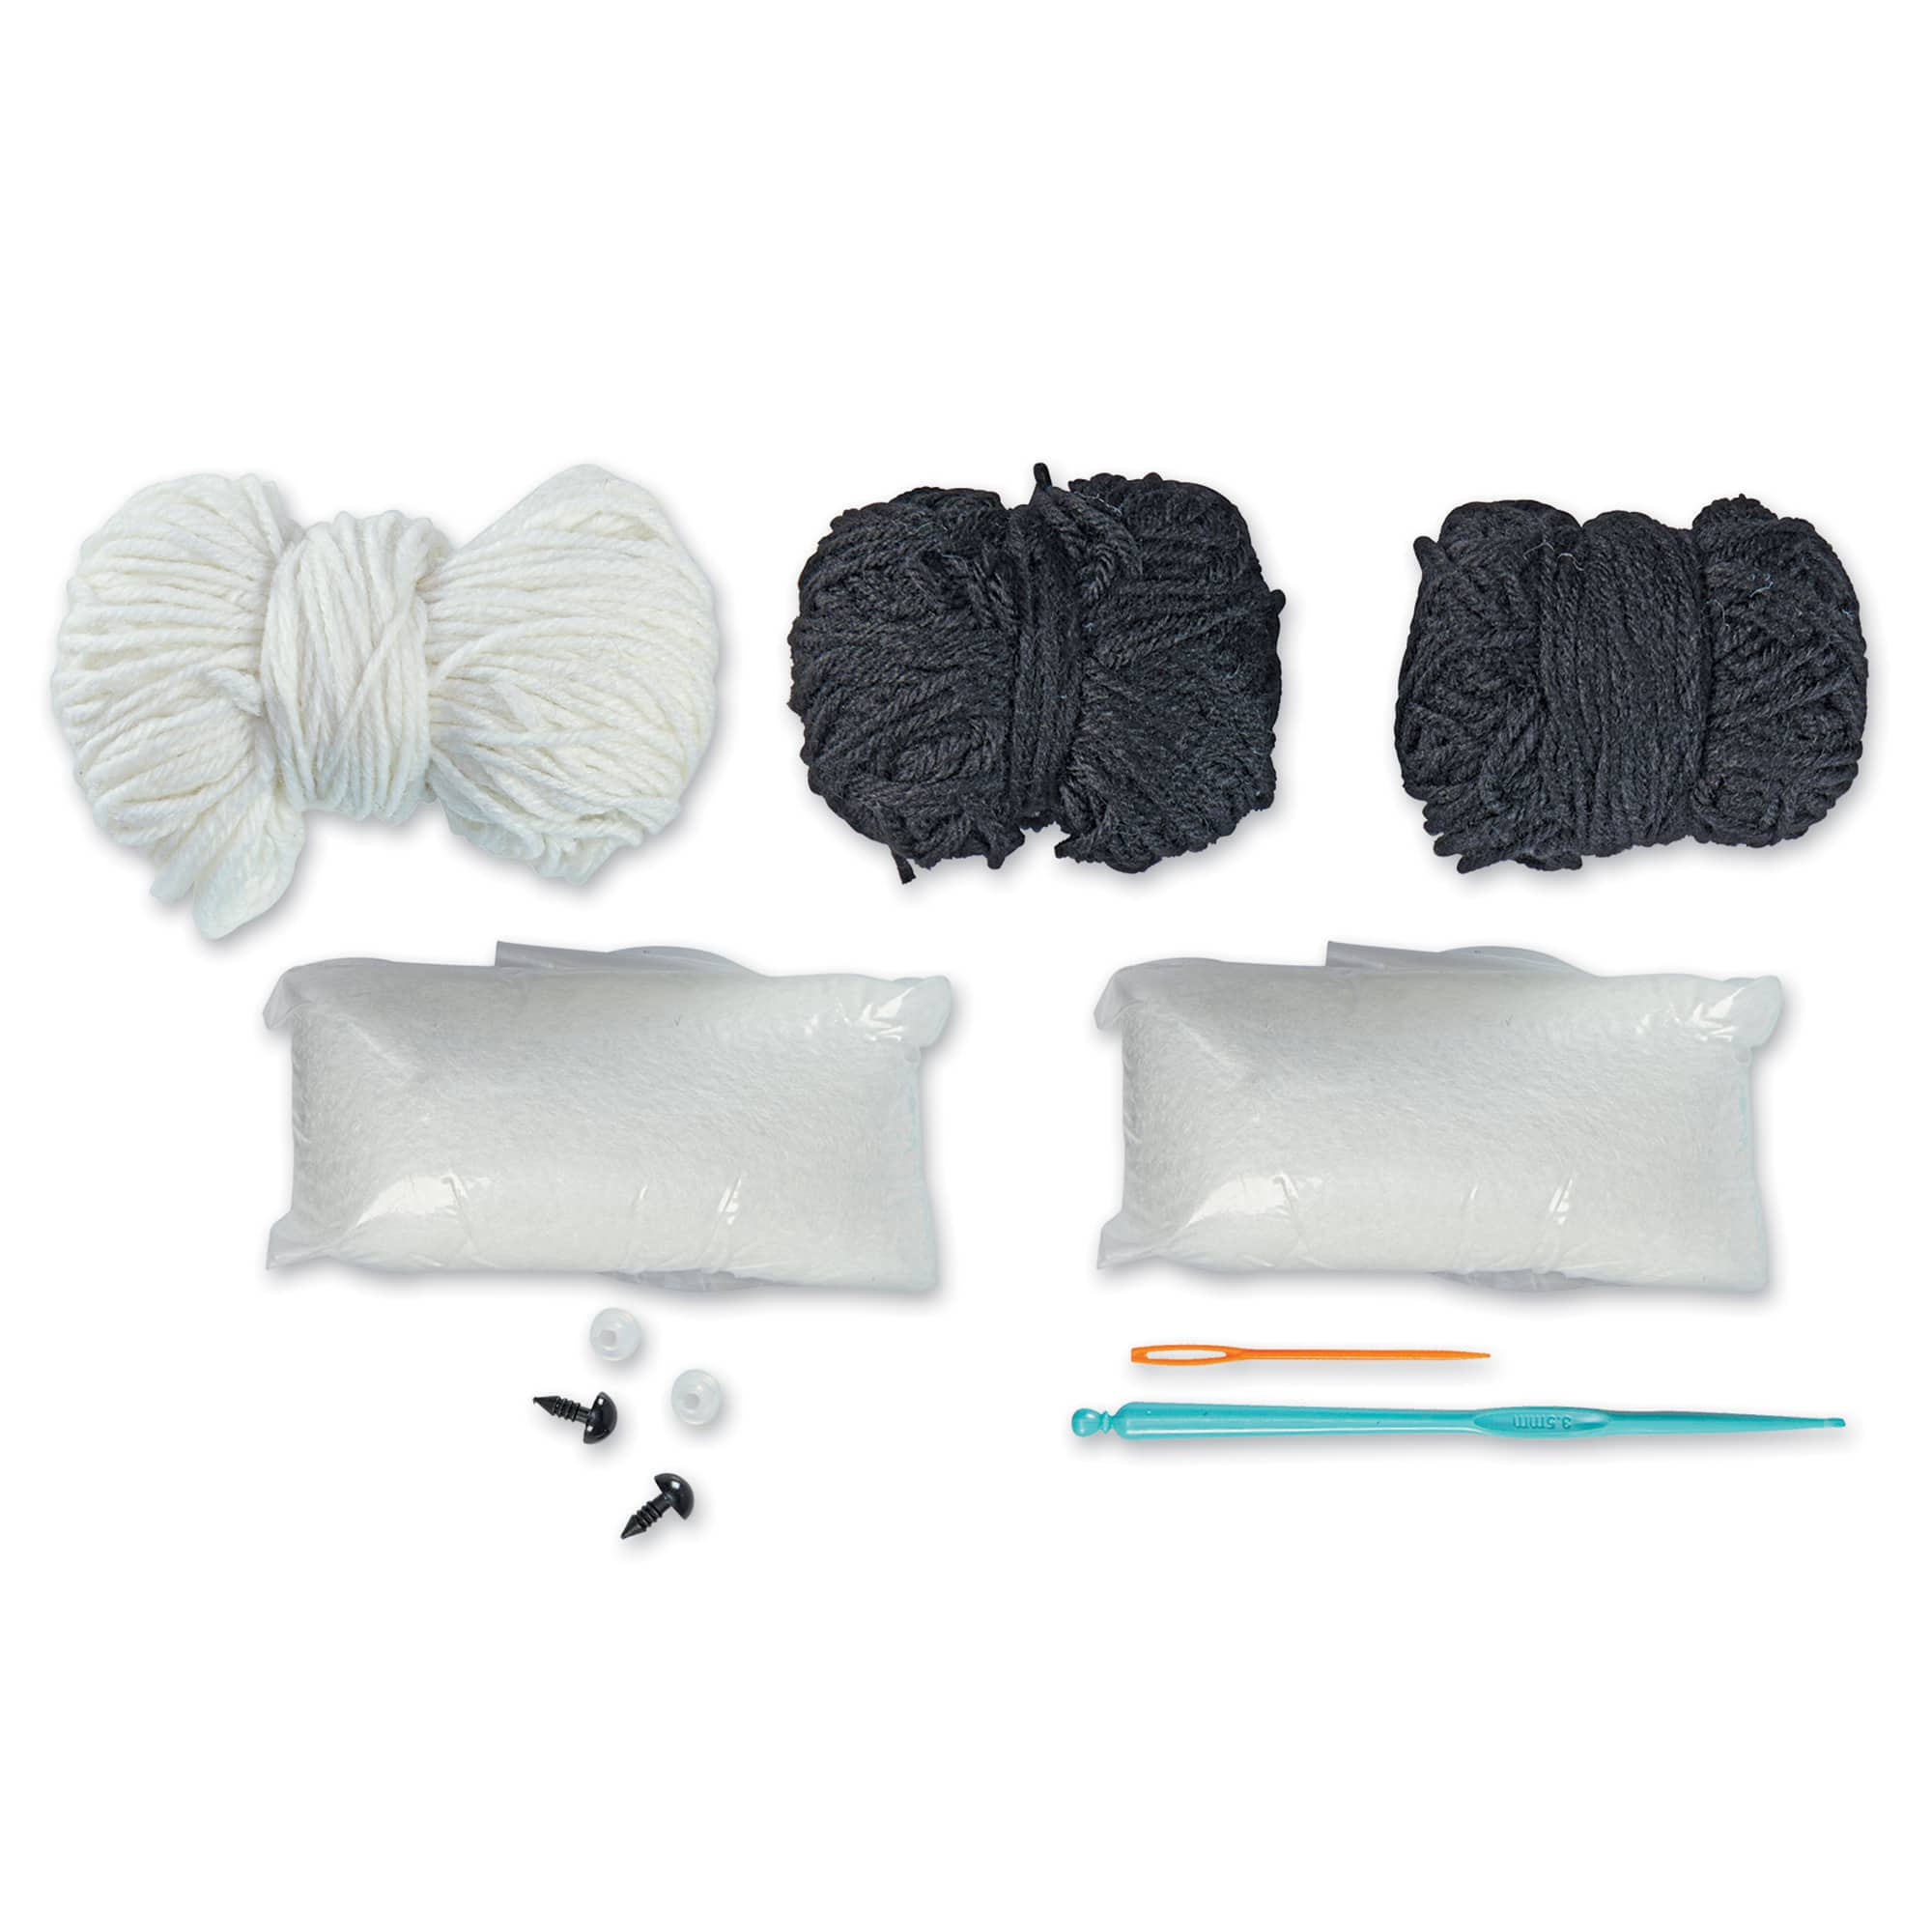 Intermediate Zebra Amigurumi Crochet Kit by Loops &#x26; Threads&#xAE;